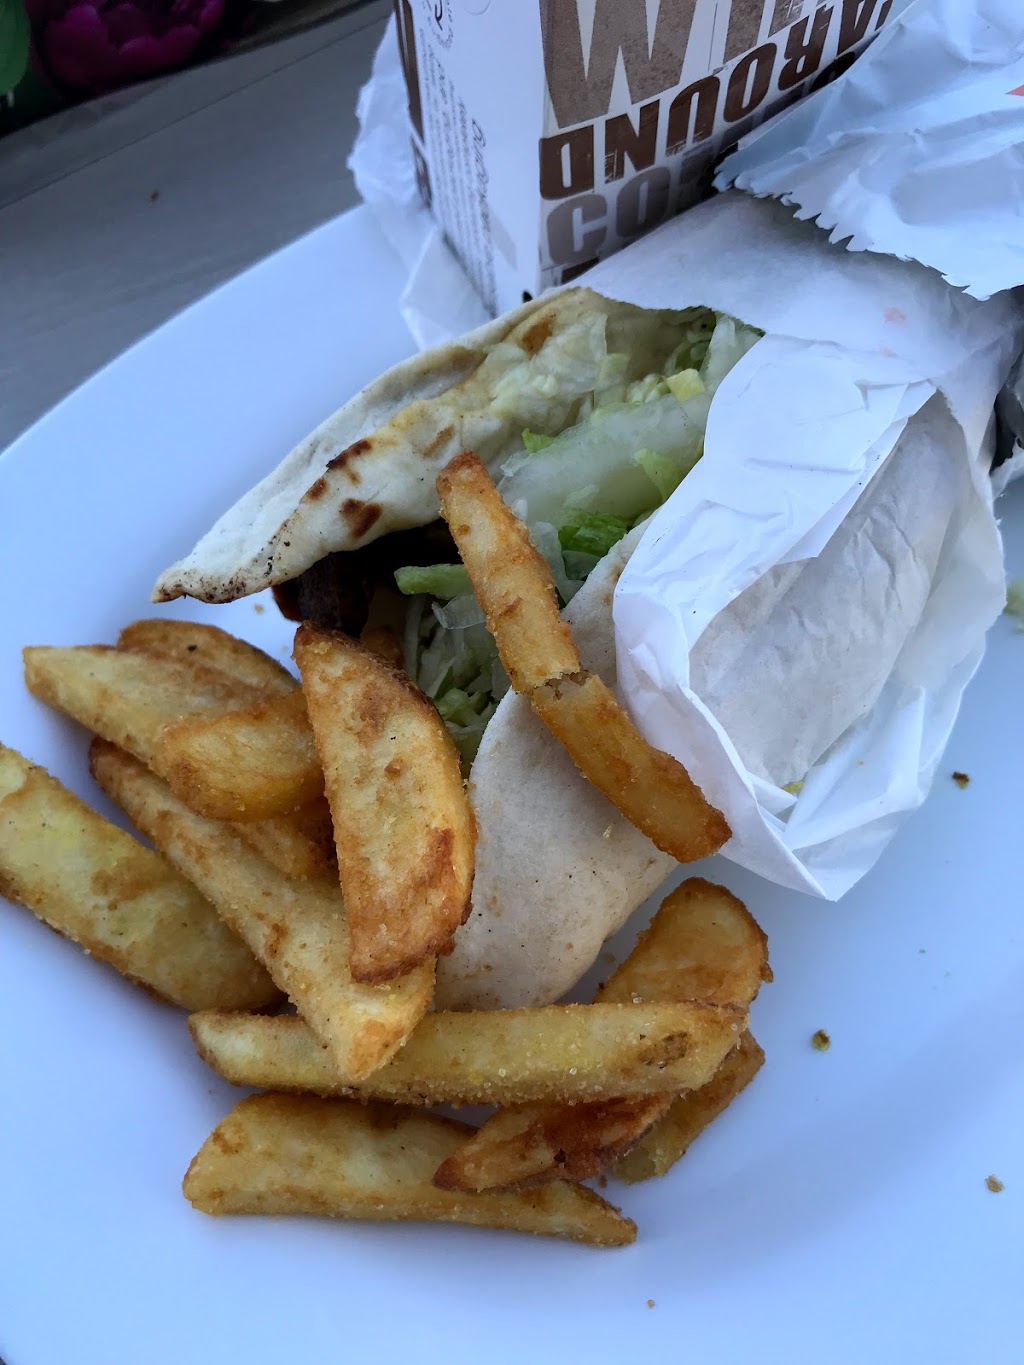 Megabites Kebab & Chargrill & Pizza | 90 Blacktown Rd, Blacktown NSW 2148, Australia | Phone: (02) 9622 6262